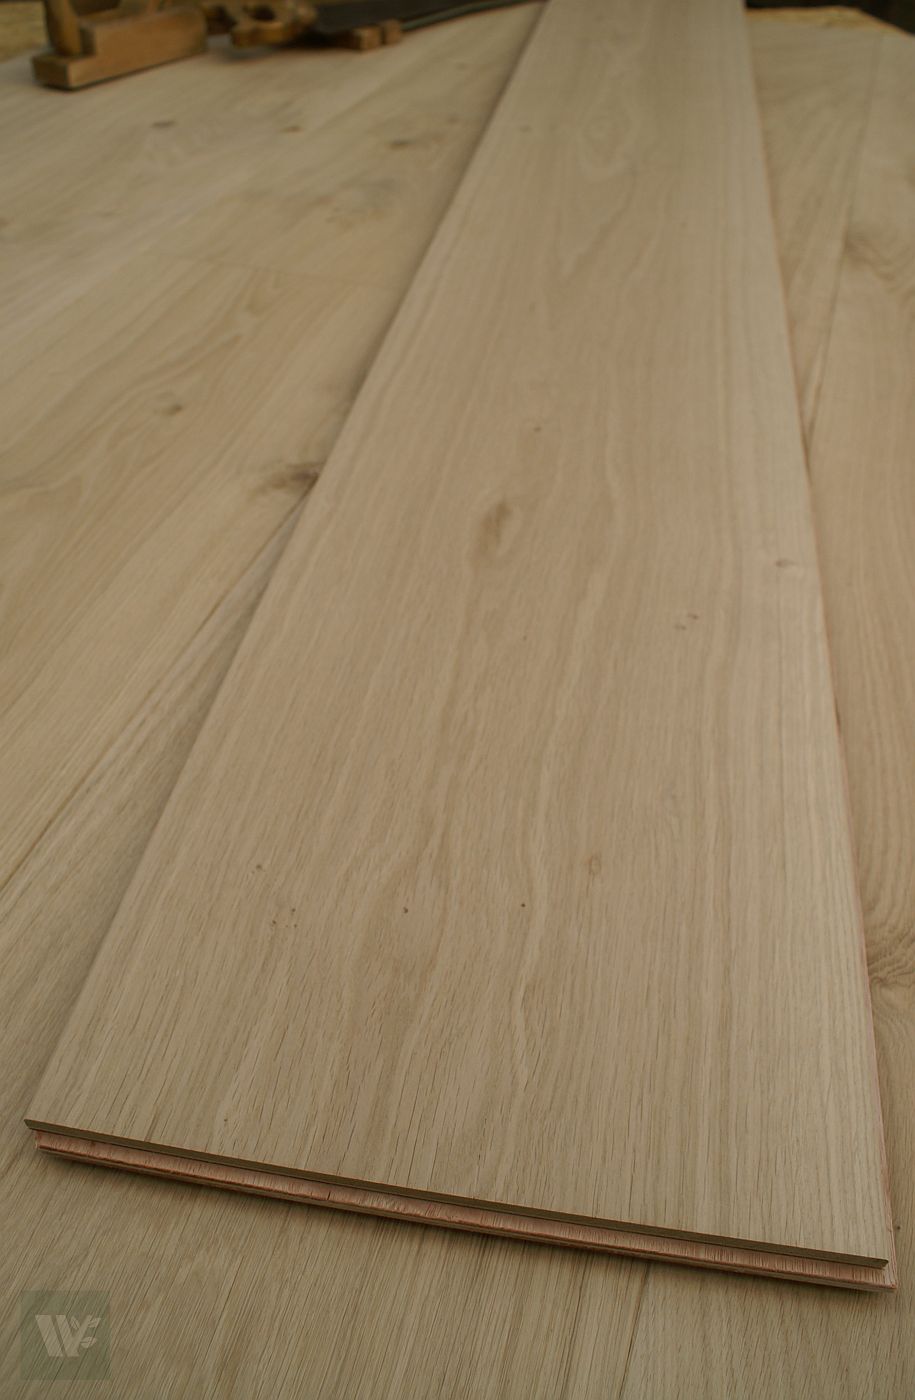 1ft Wide Massive Engineered Oak Flooring Long Boards Unfinished Ech3 300mm Ebay